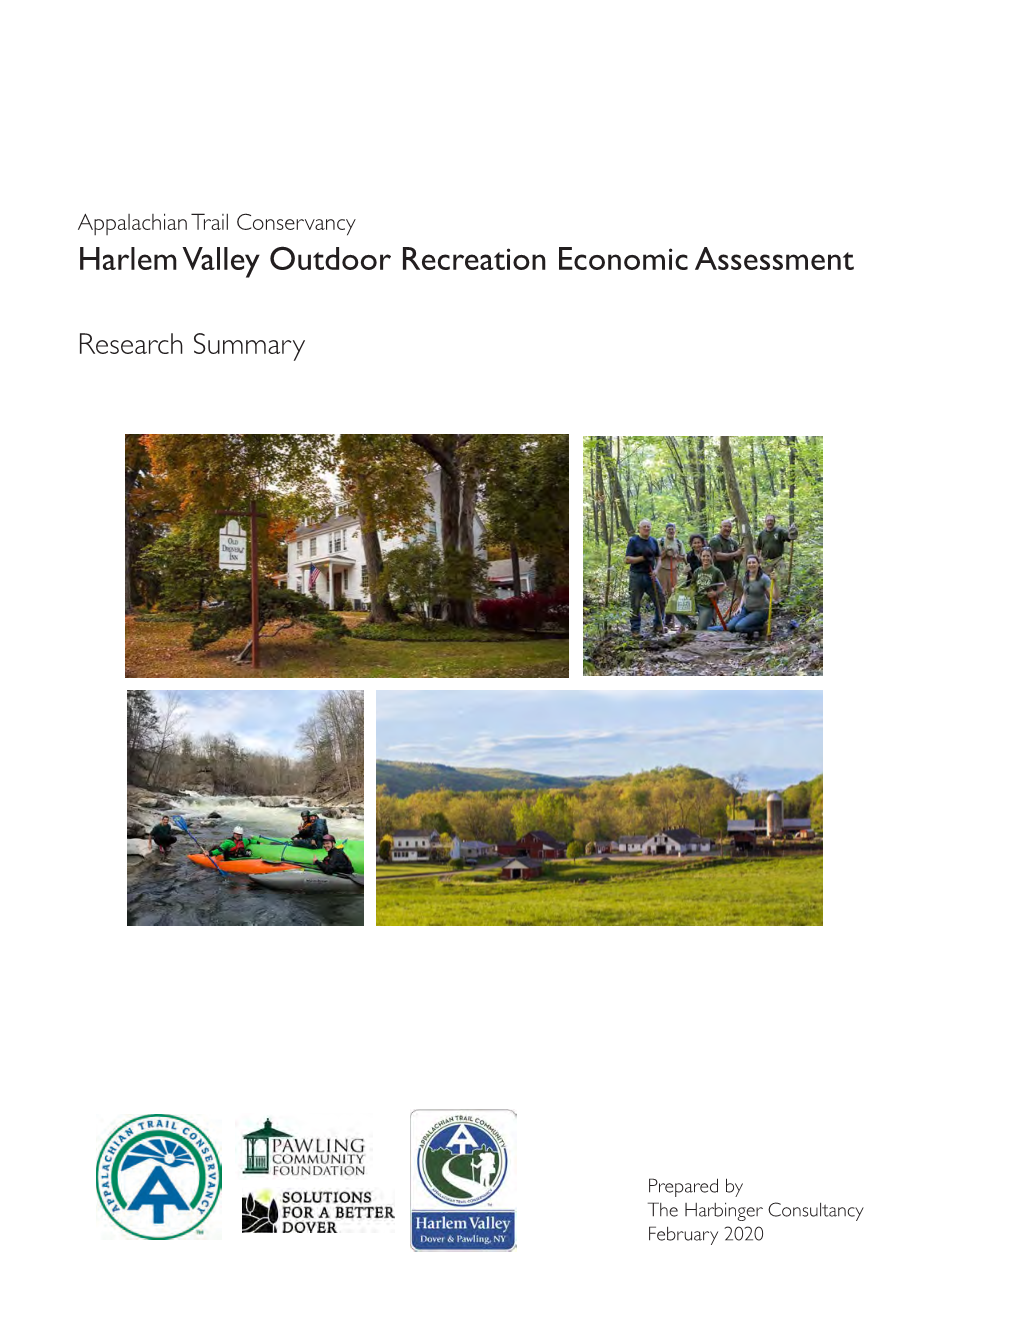 Harlem Valley Outdoor Recreation Economic Assessment